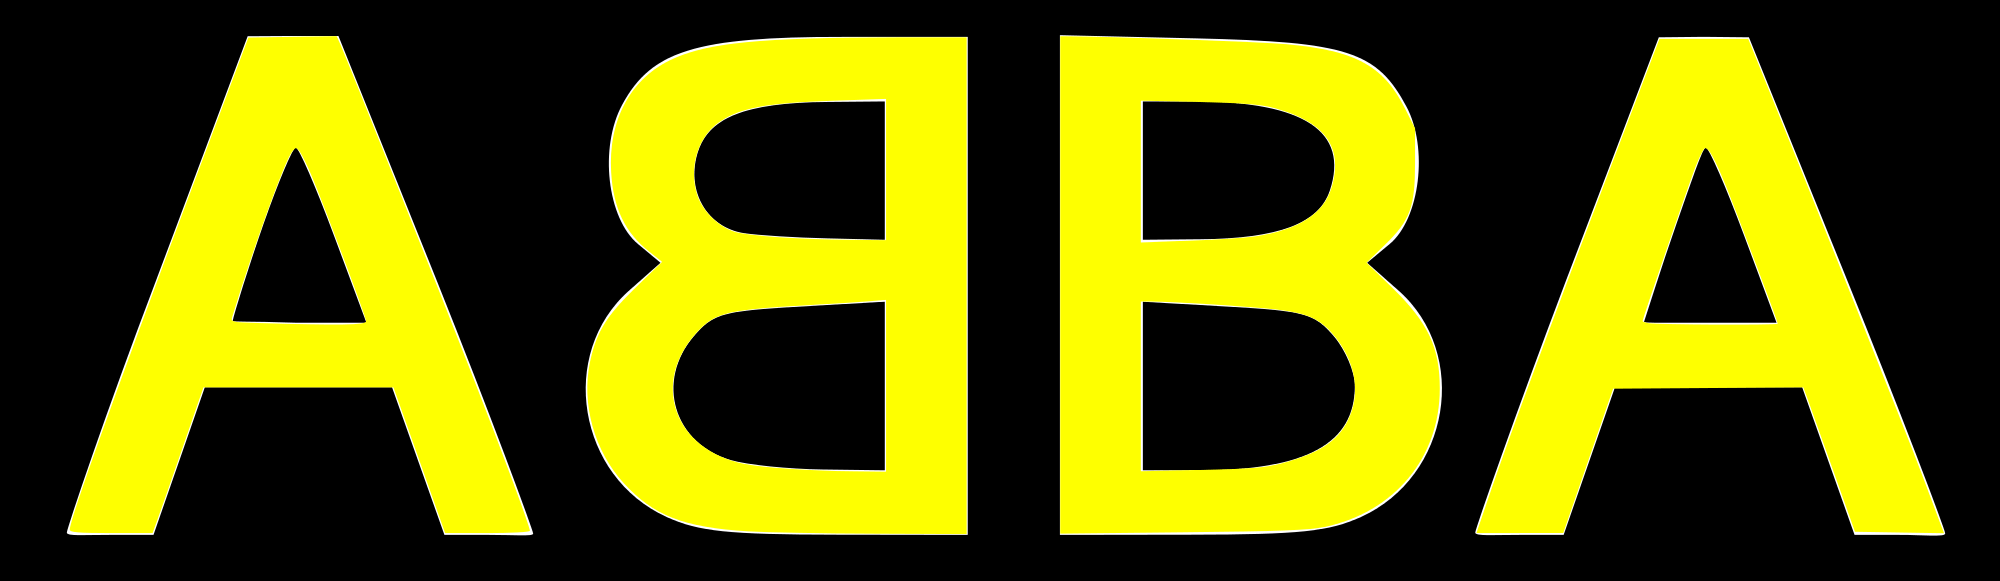 Abba Logo - File:Abba logo.svg - Wikimedia Commons